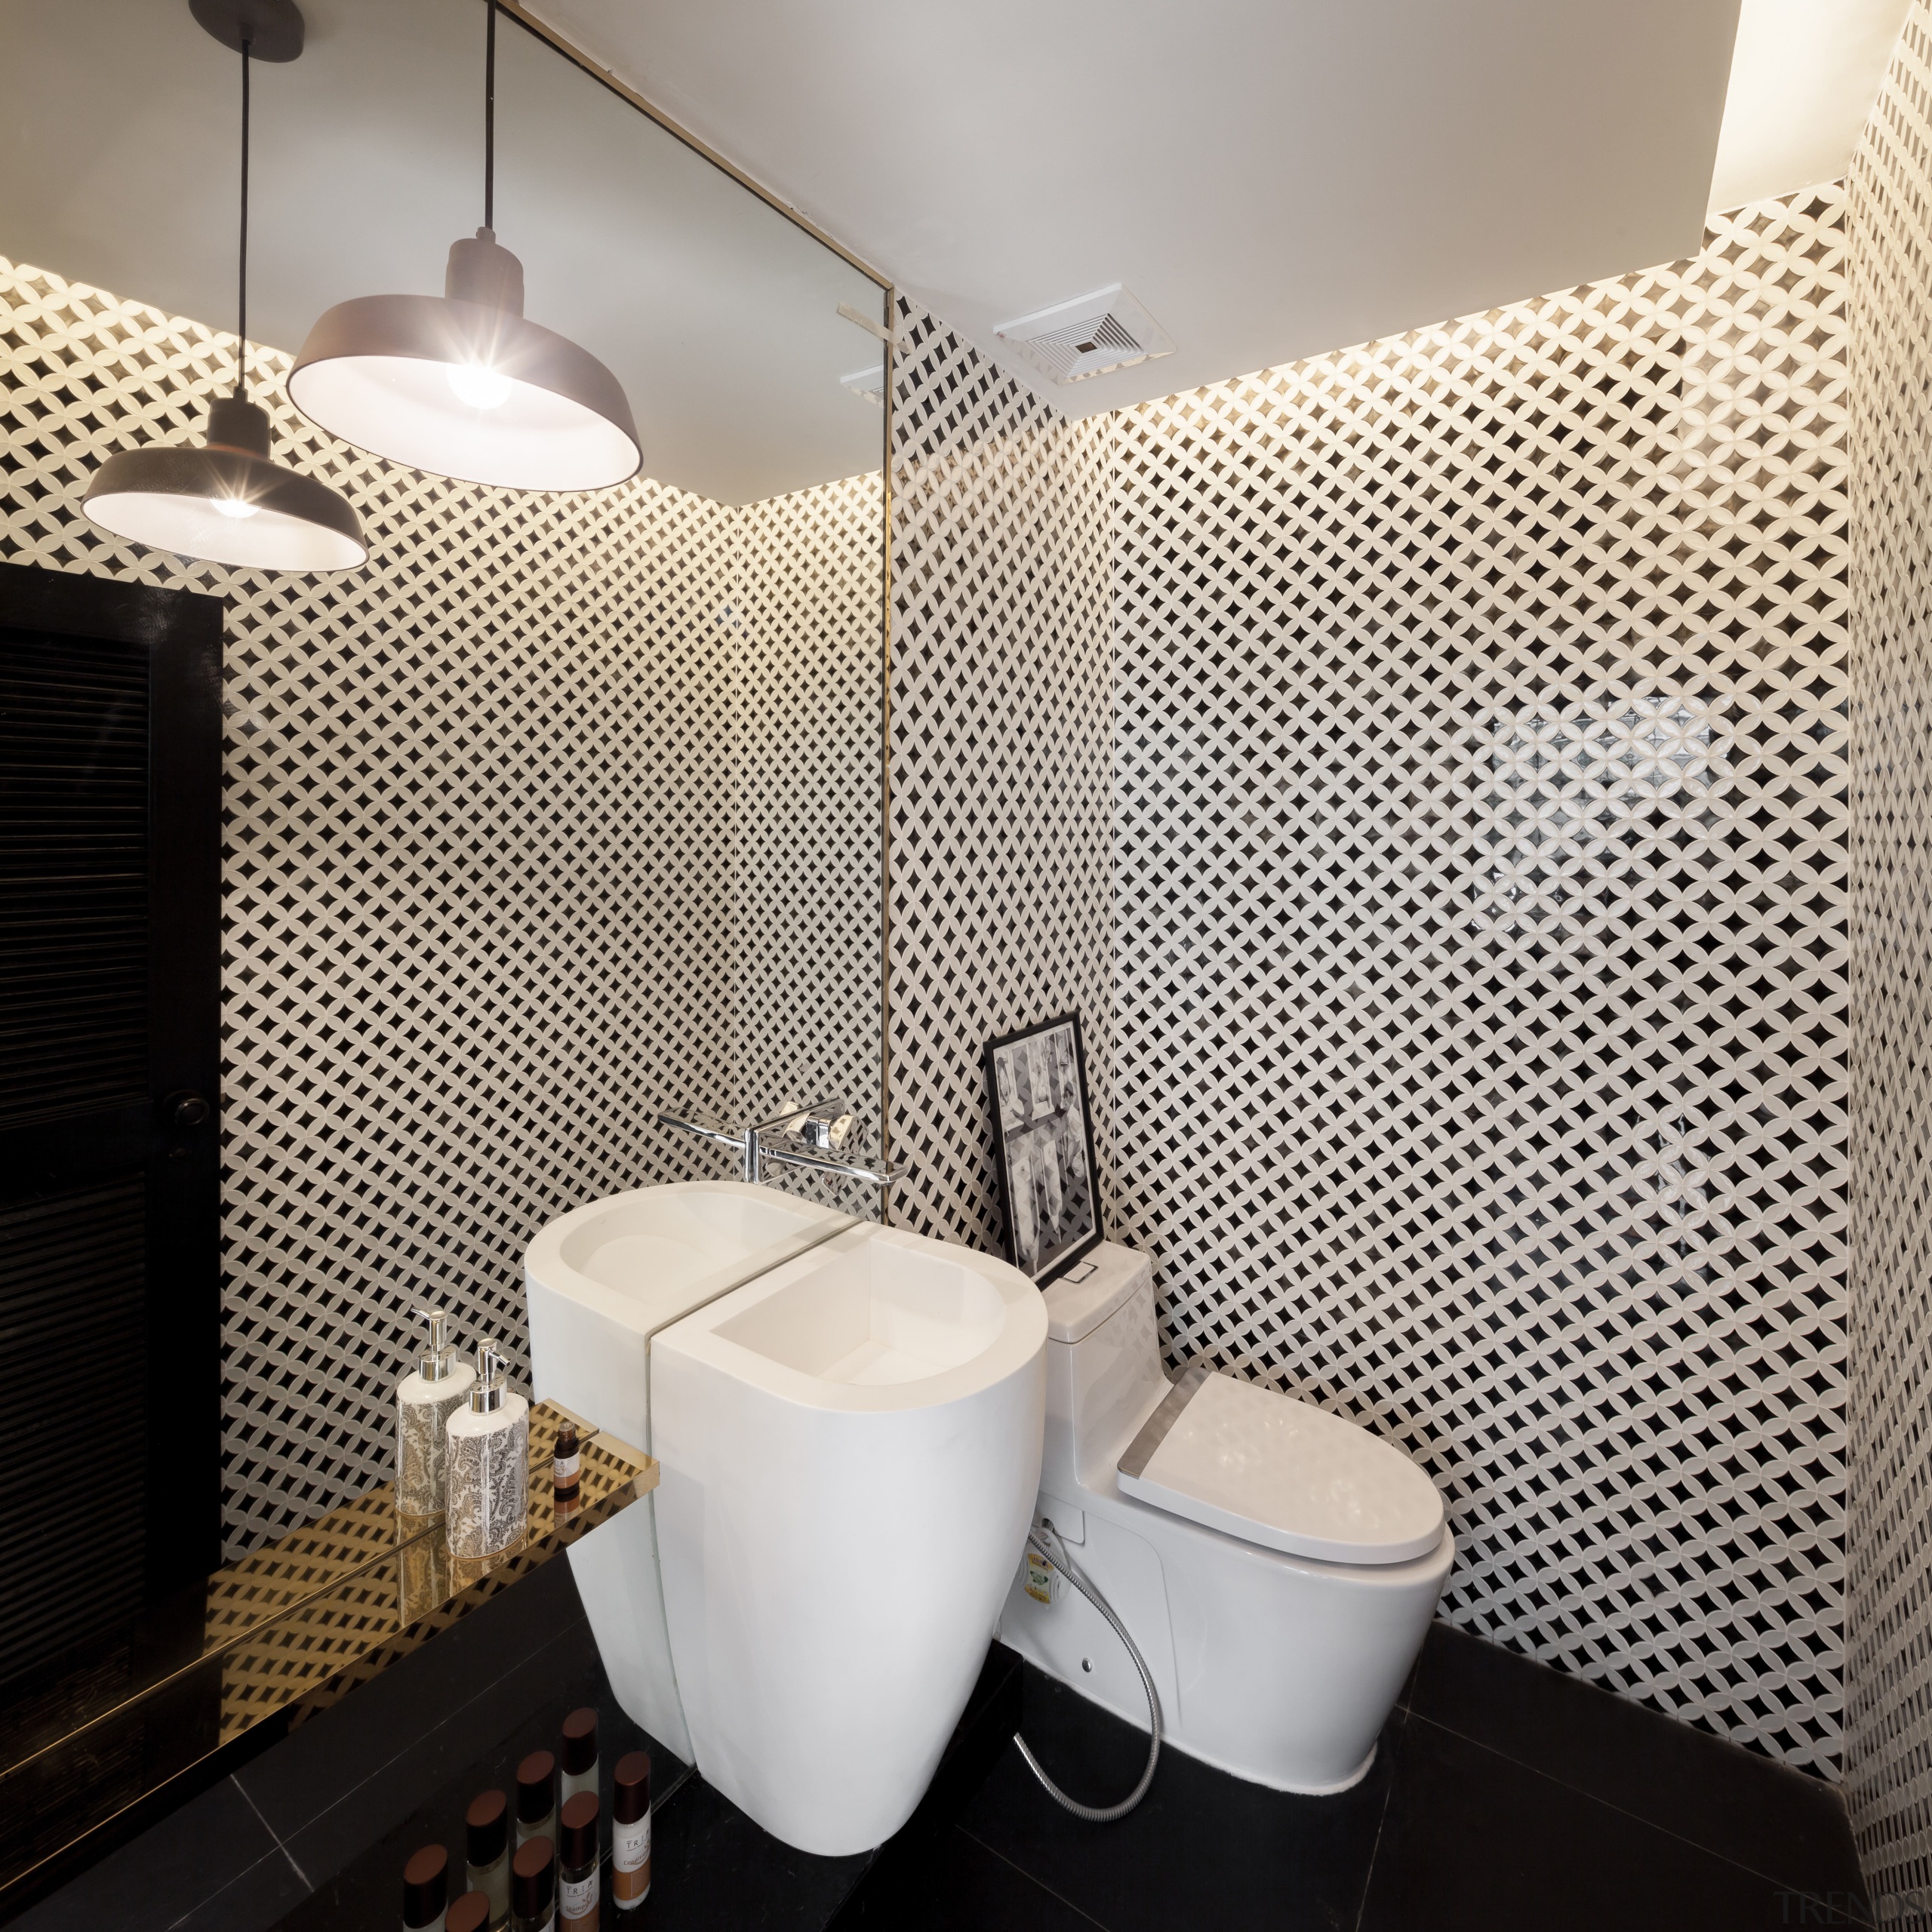 This eye-catching powder room is part of a bathroom, ceramic, flooring, interior design, toilet, basin, tile, renovated bathroom